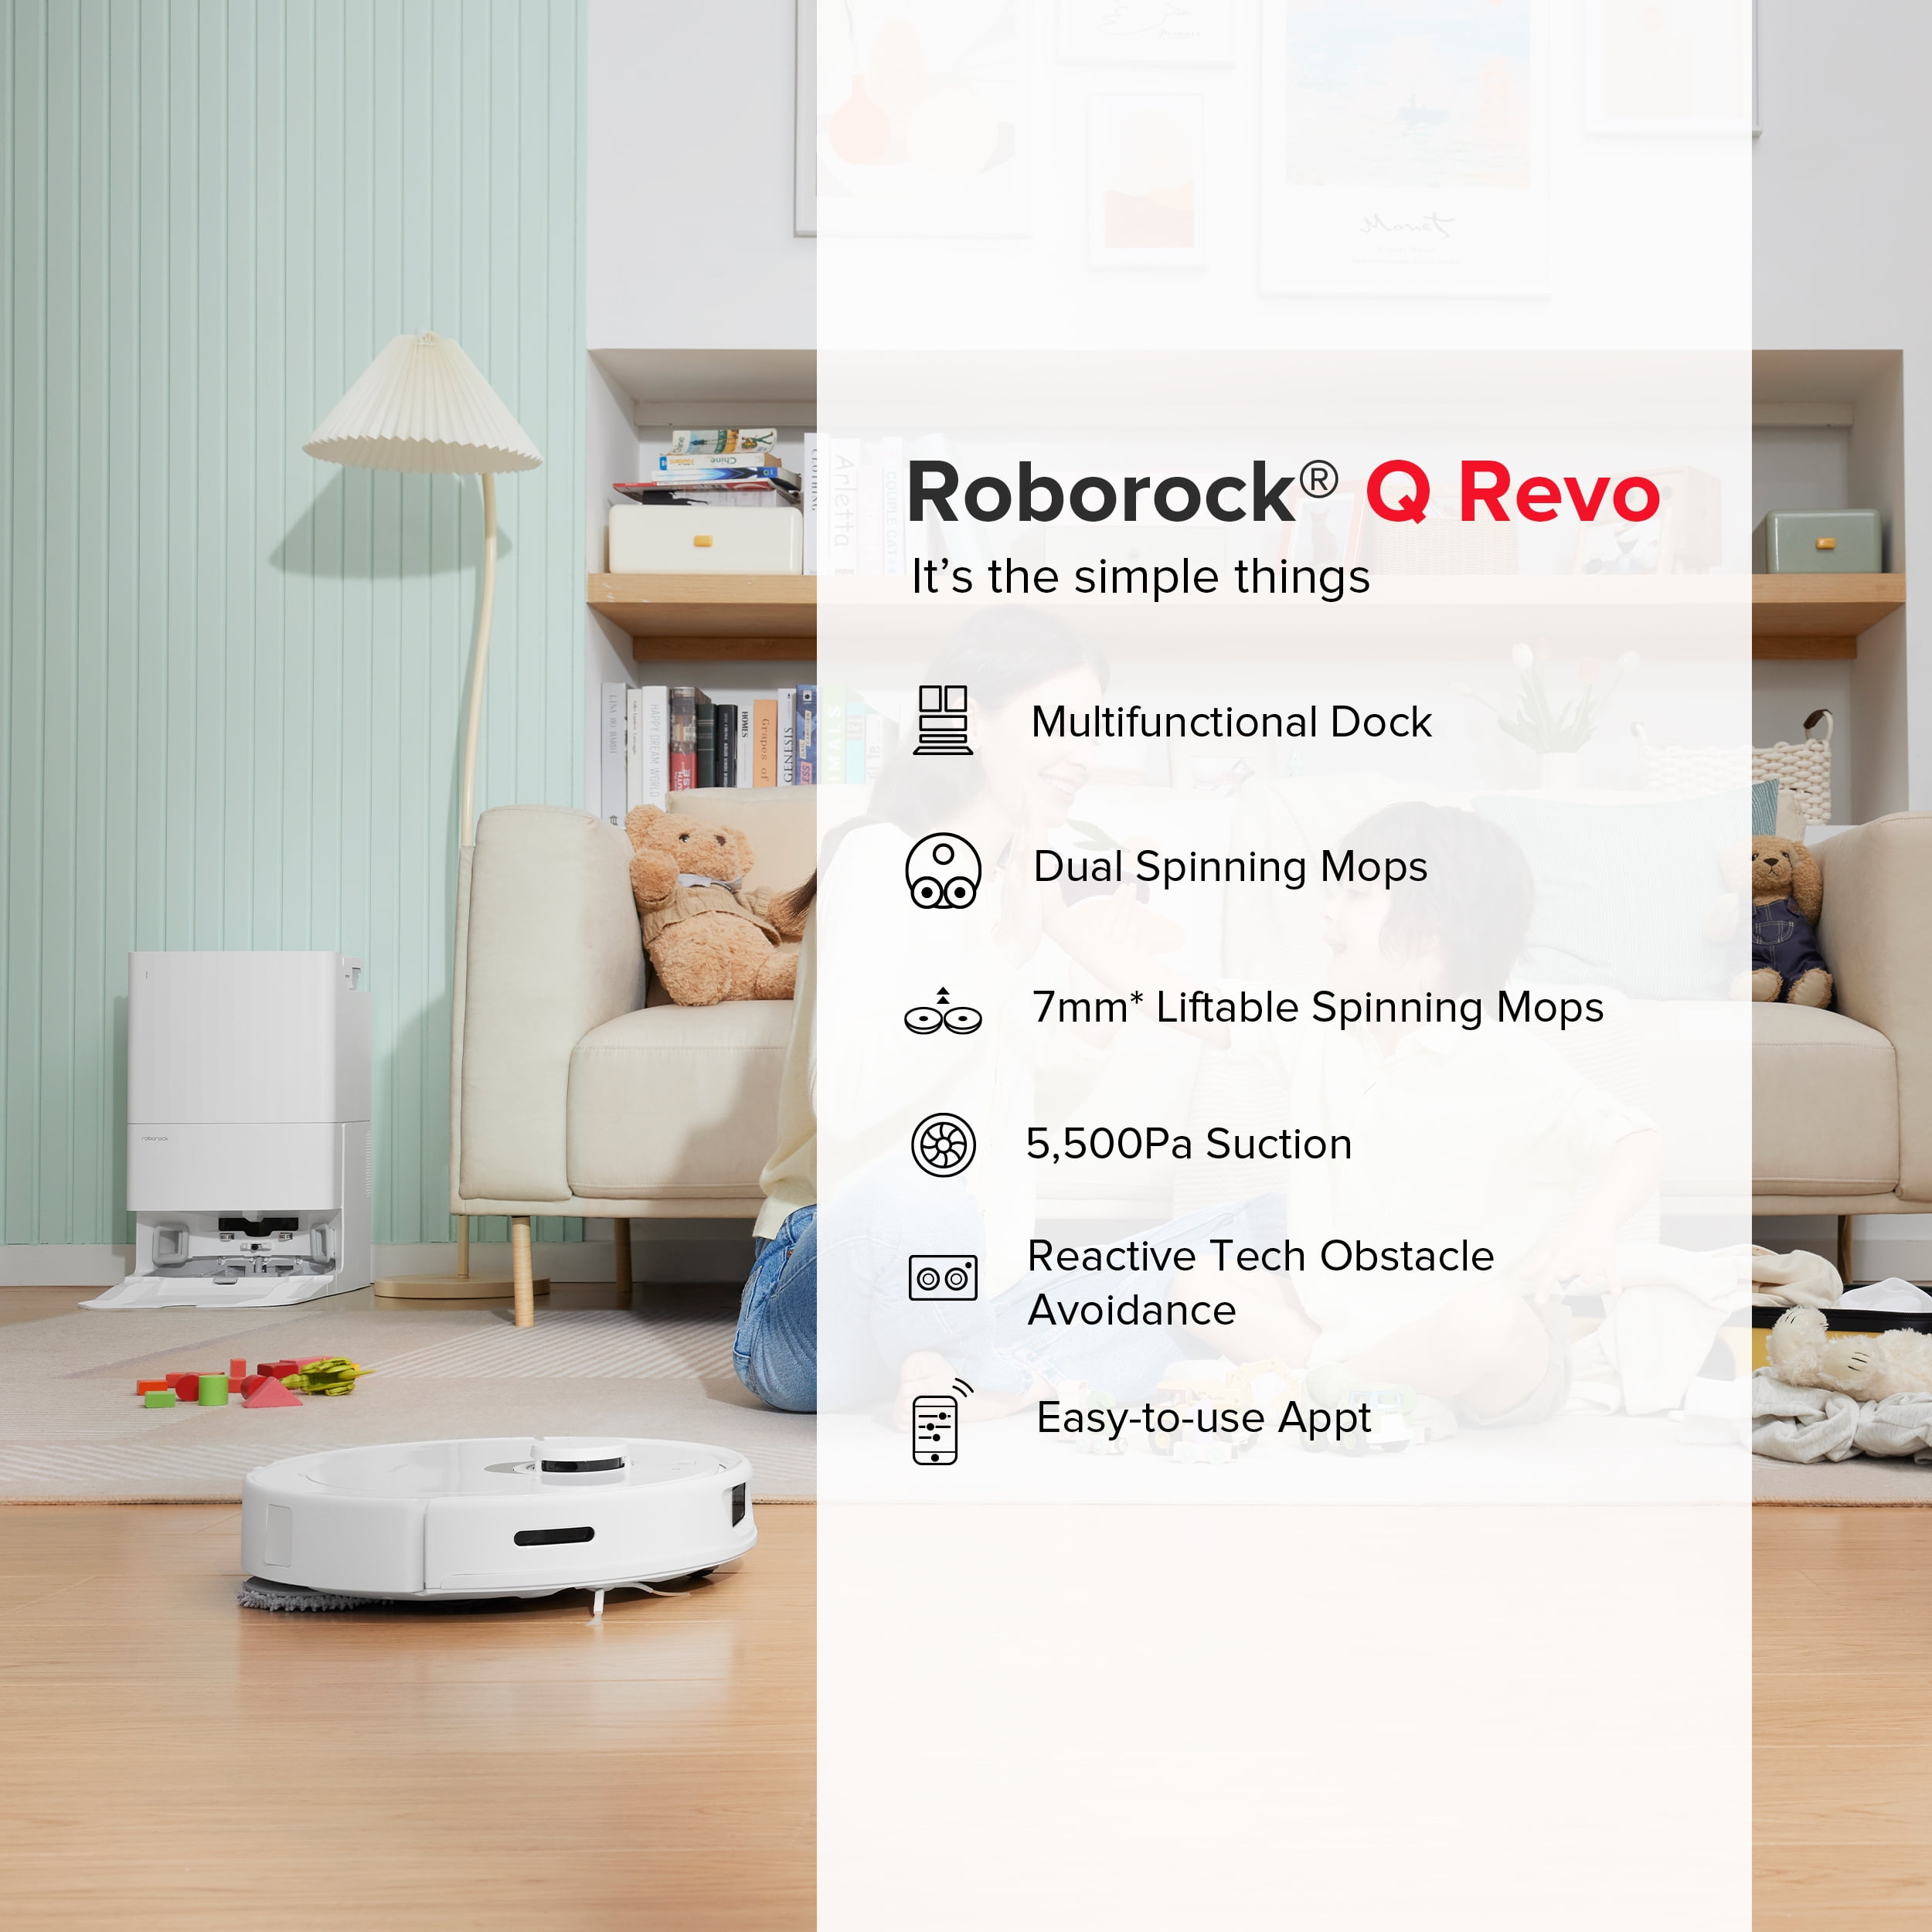 Roborock Q Revo: Test, Preis, Infos, Review - COMPUTER BILD